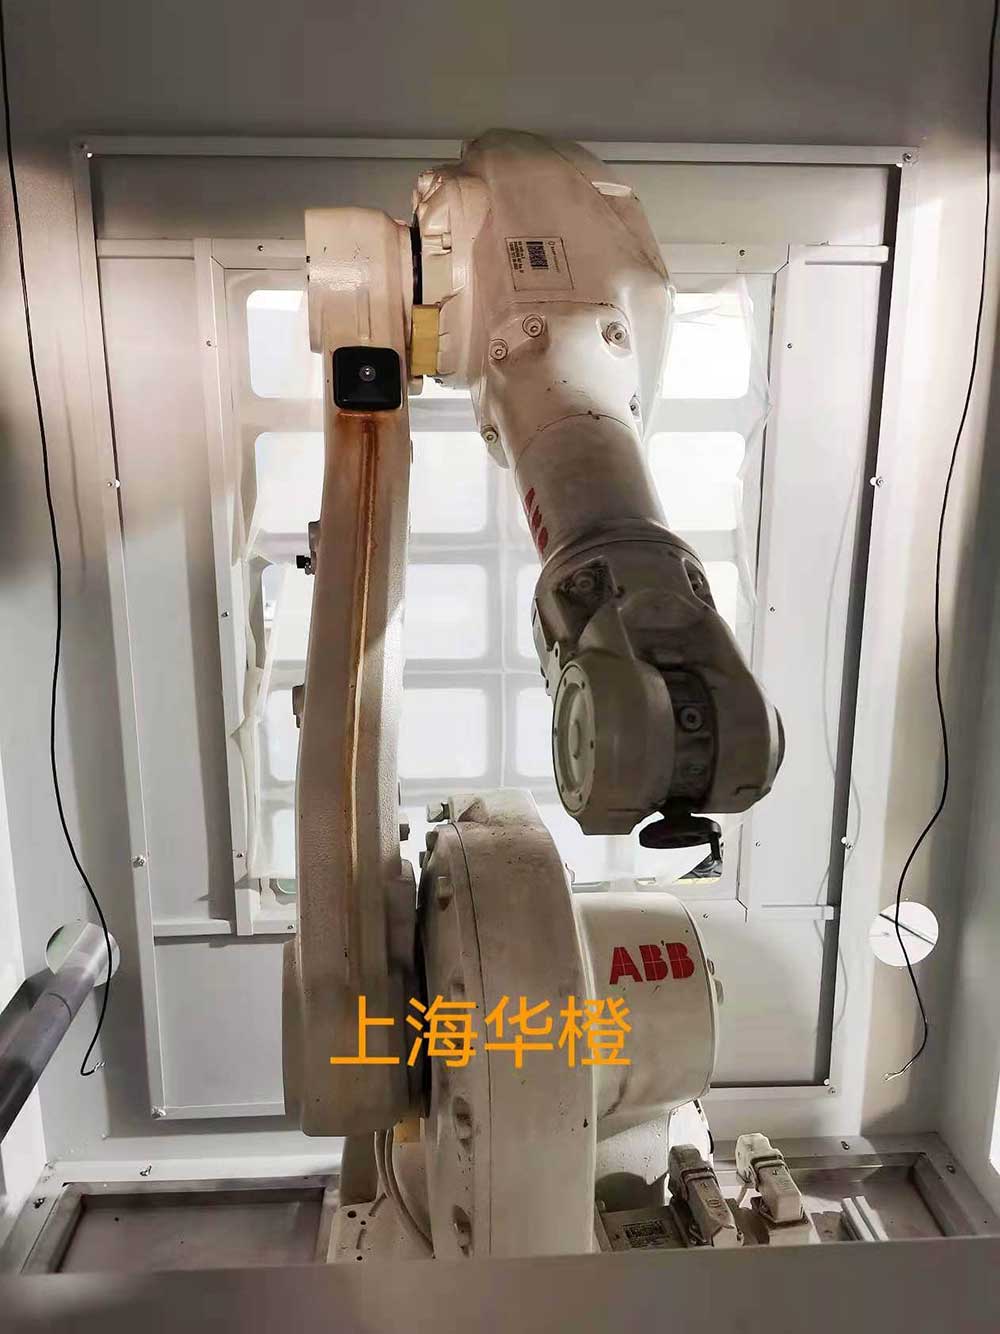 ABB机器人保养6